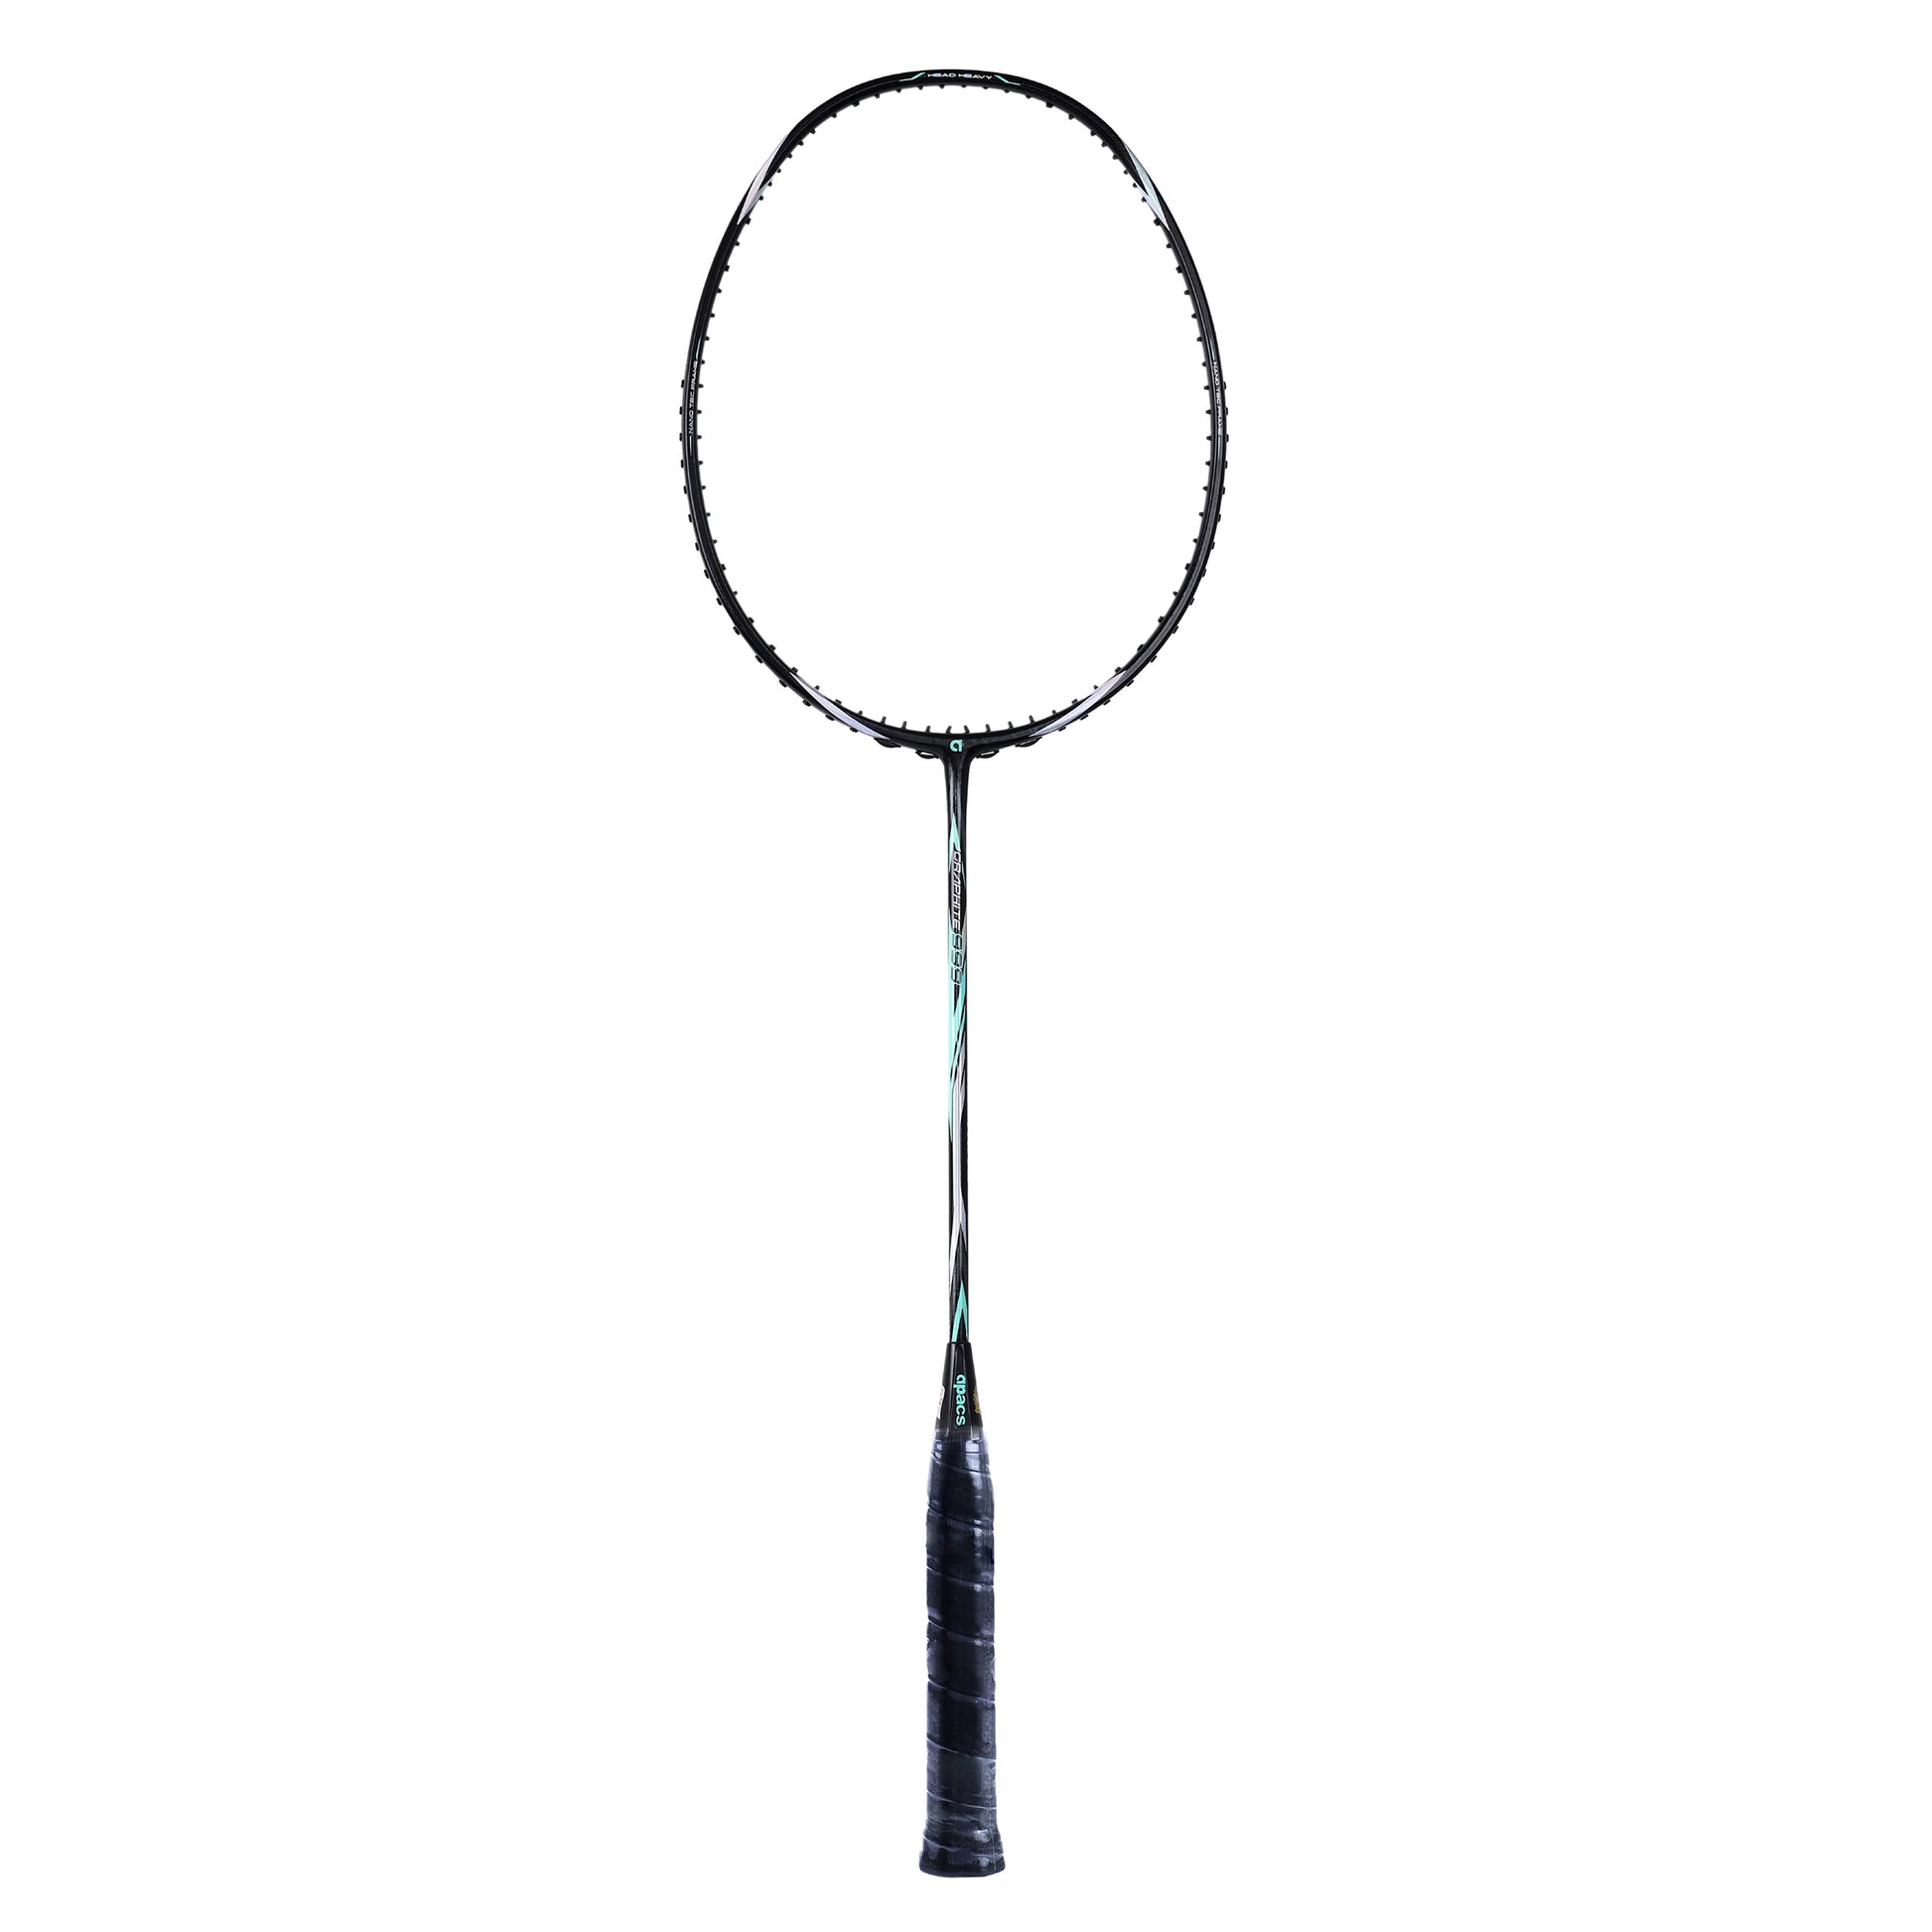 Apacs Graphite 999 Badminton Racket - without Cover - Best Price online Prokicksports.com